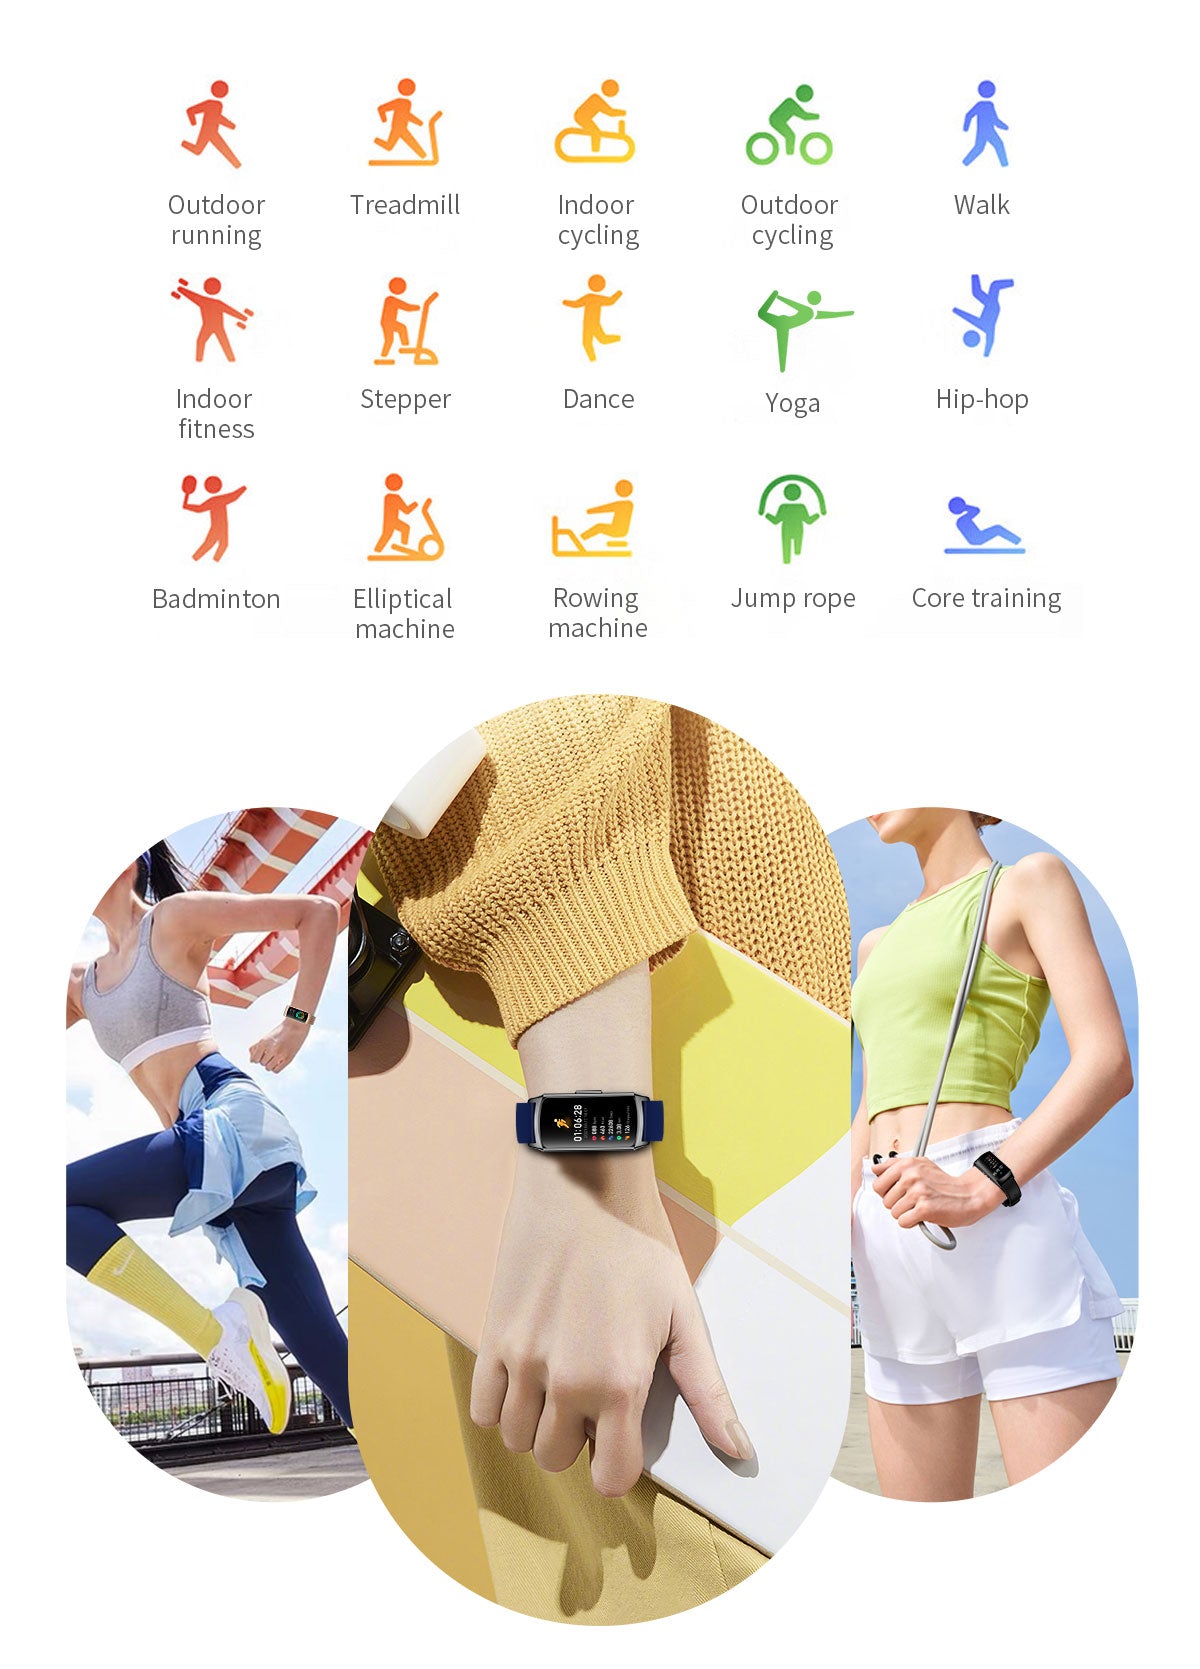 【SACOSDING】Smart Watch Fitness Tracker (Answer/Make Calls), 1.58" AMOLED Display